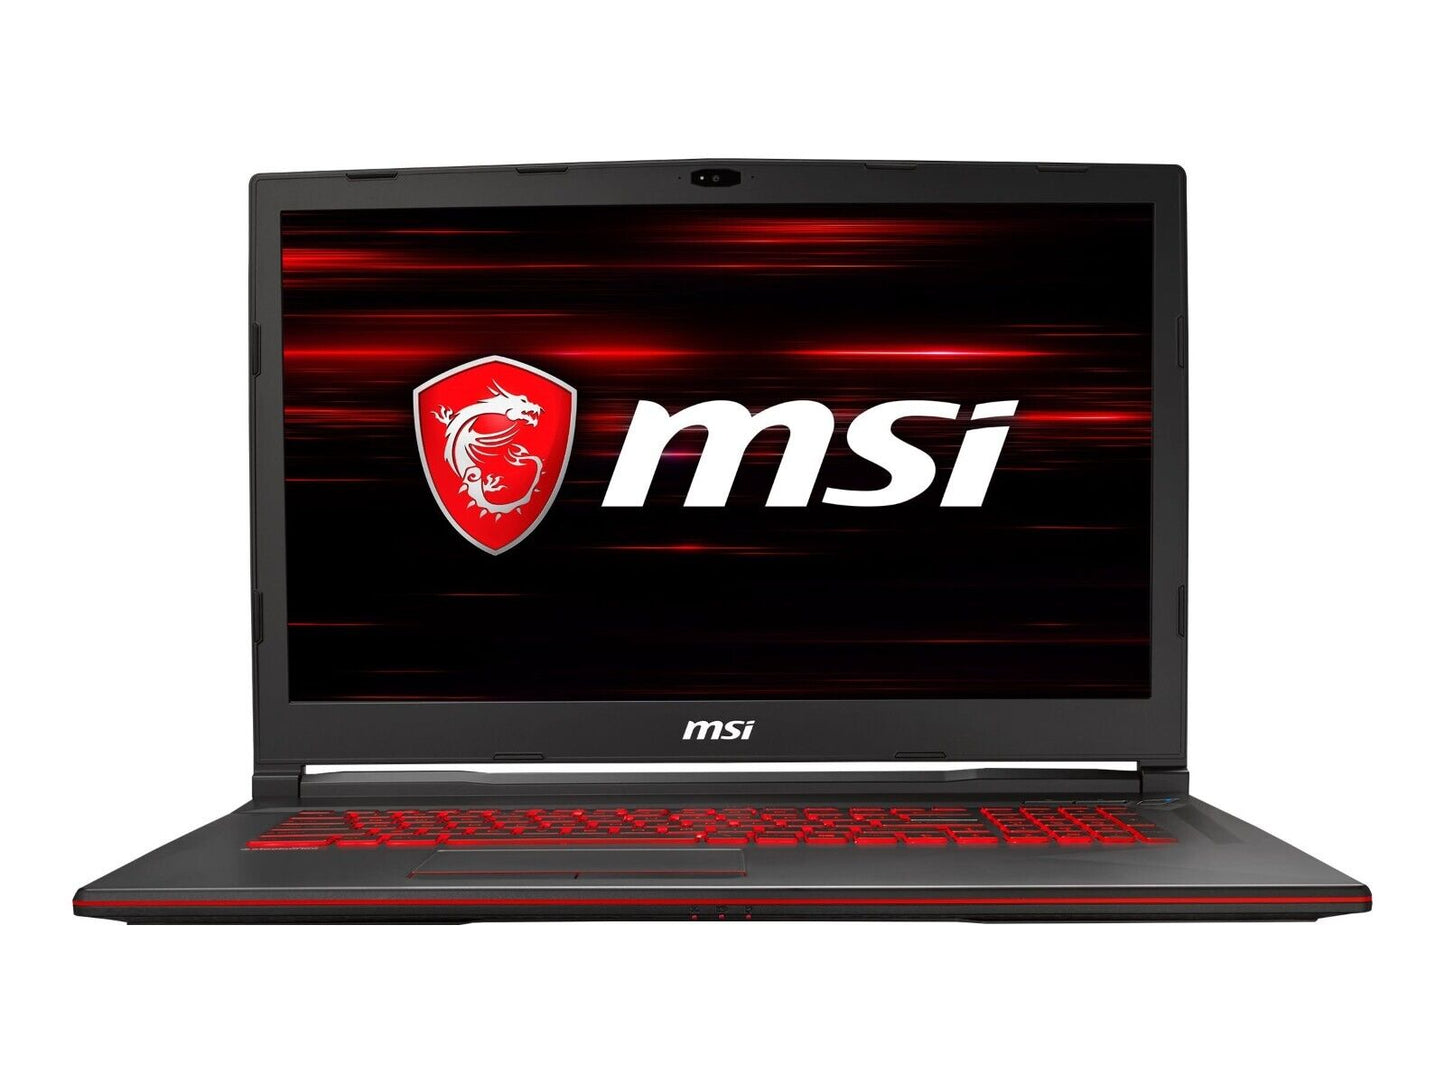 MSI GL63 Gaming Laptop 15.6", Intel Core i7-8750H, NVIDIA GeForce GTX 1050 4GB